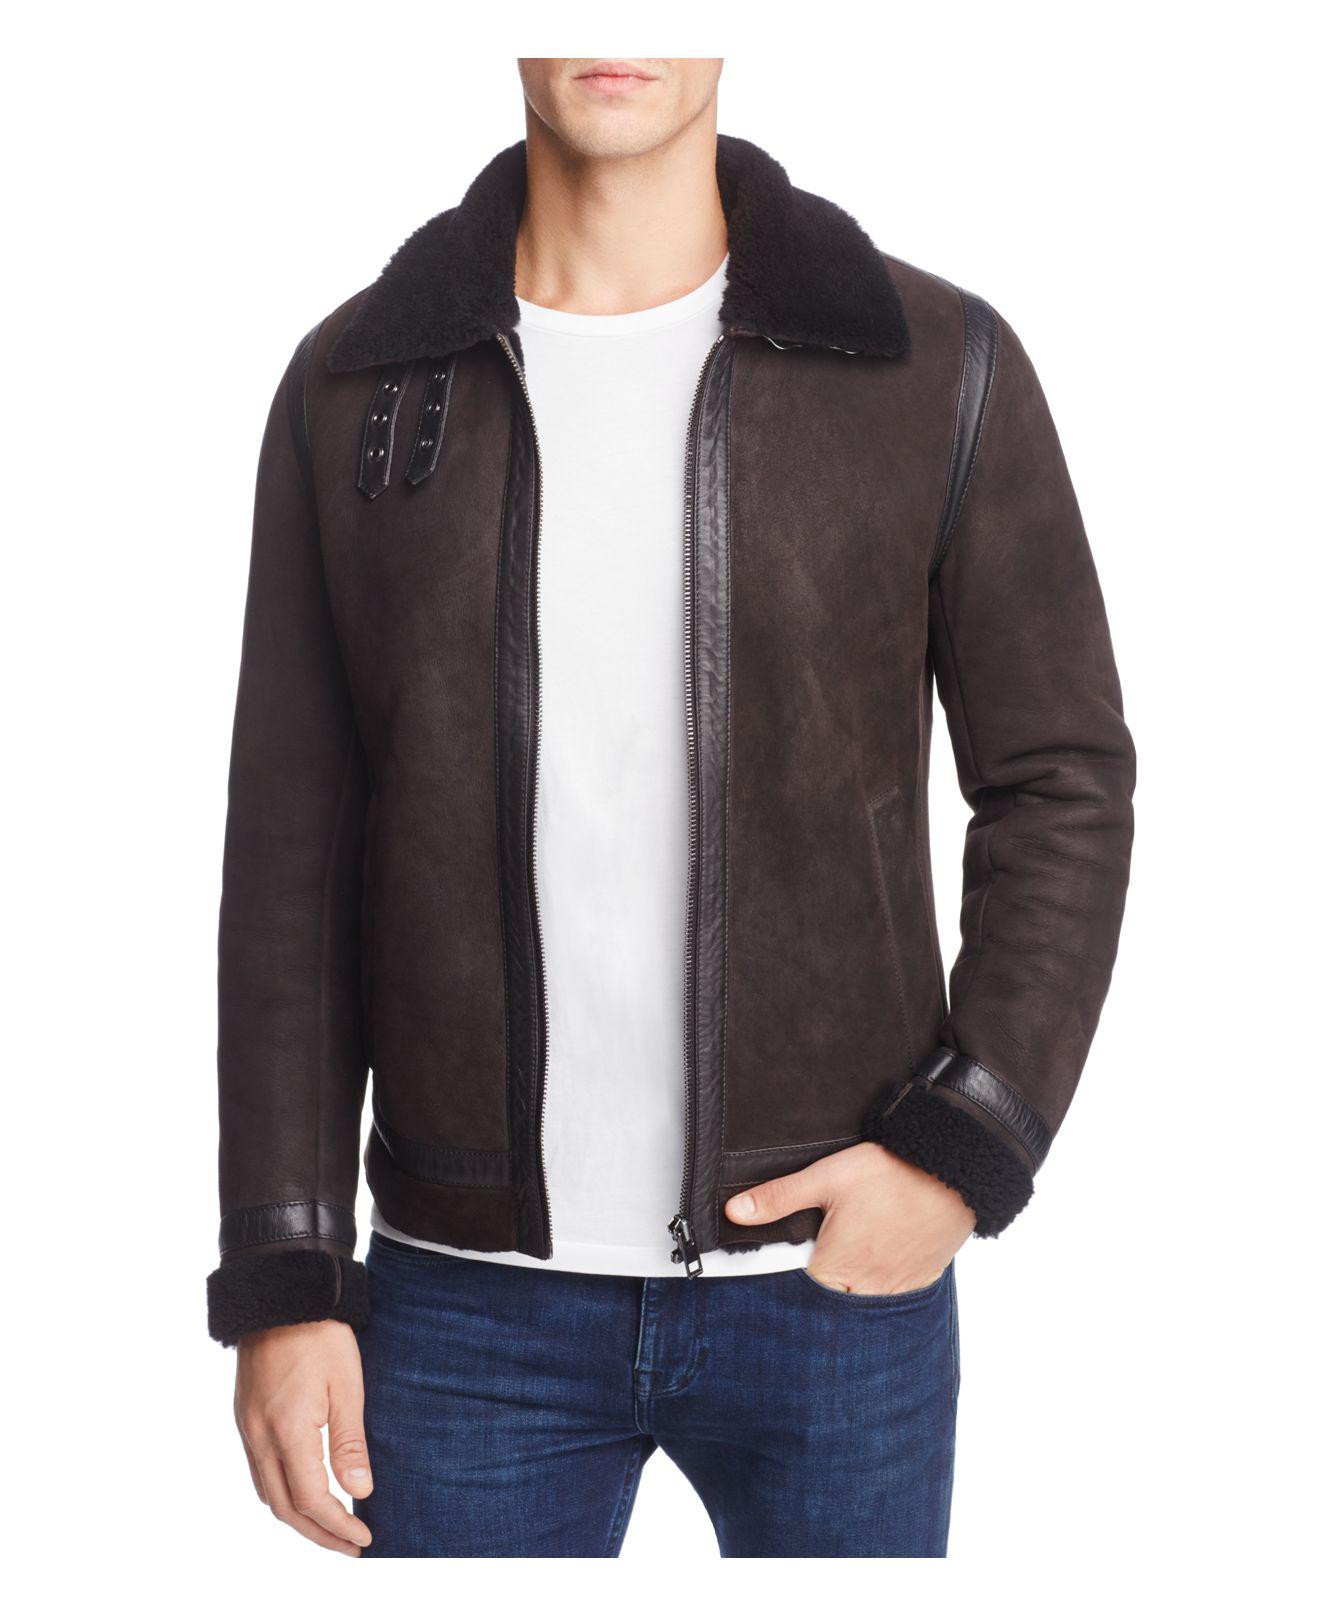 HUGO Boss Jearling Shearling Leather Jacket in Dark Brown (Brown) for Men -  Lyst